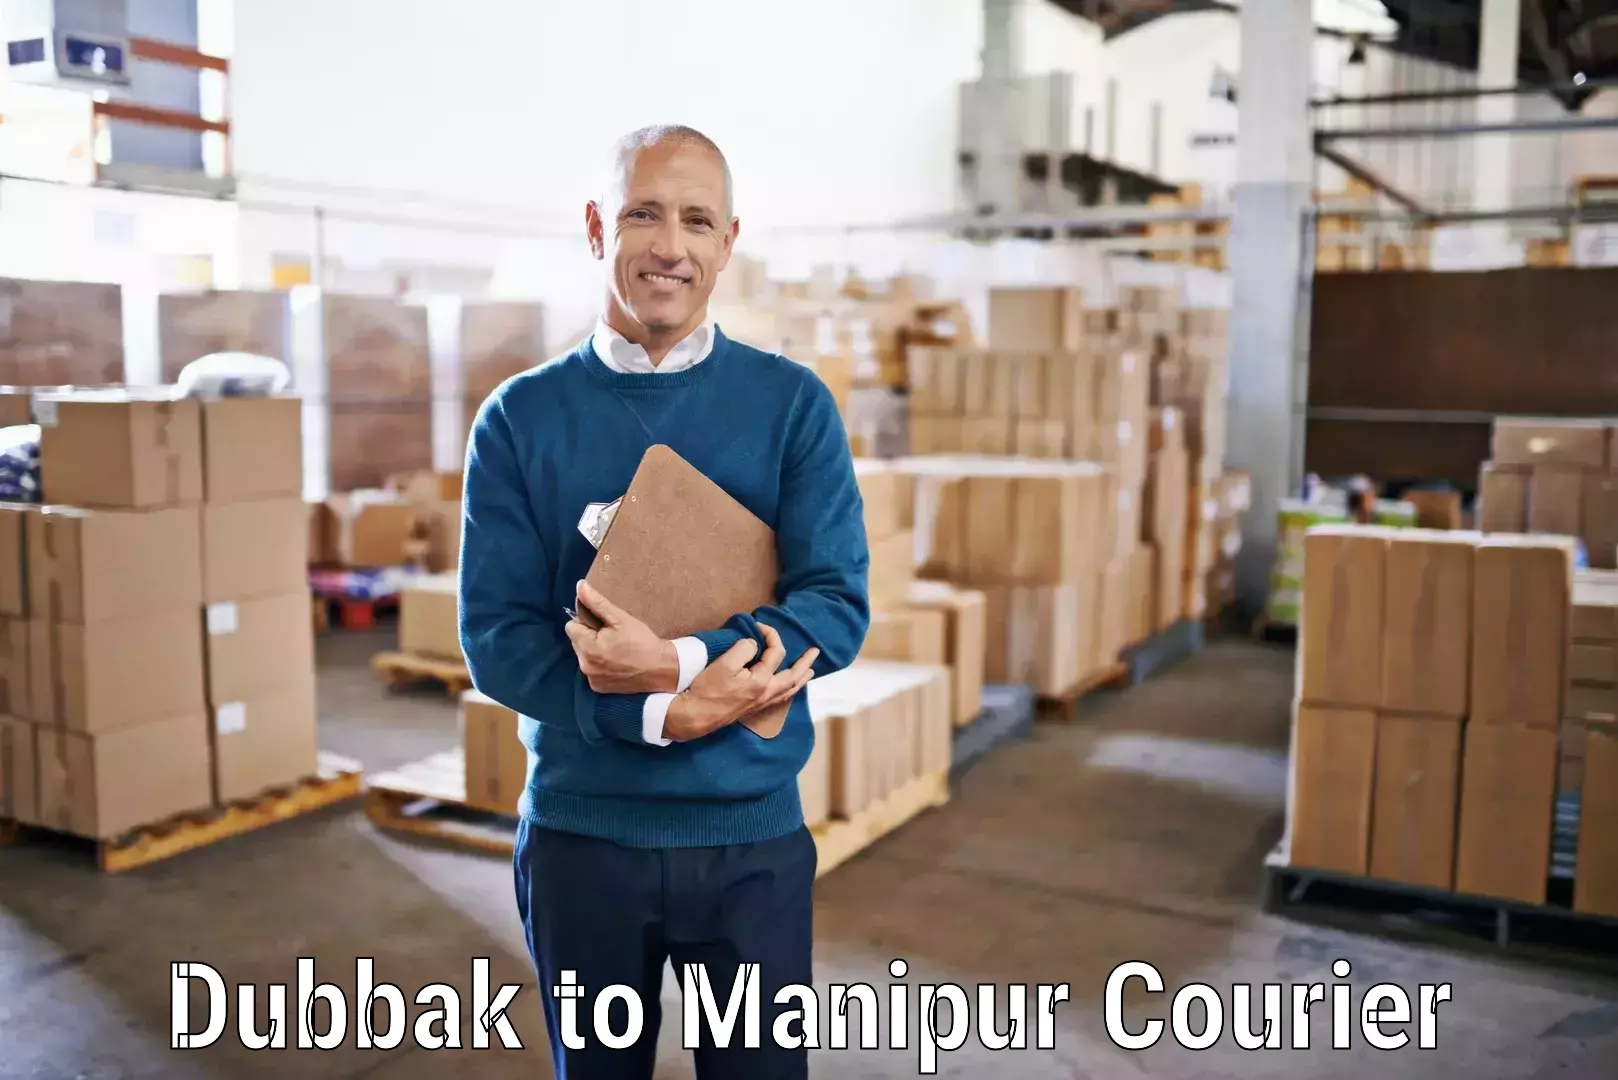 High-priority parcel service Dubbak to Manipur